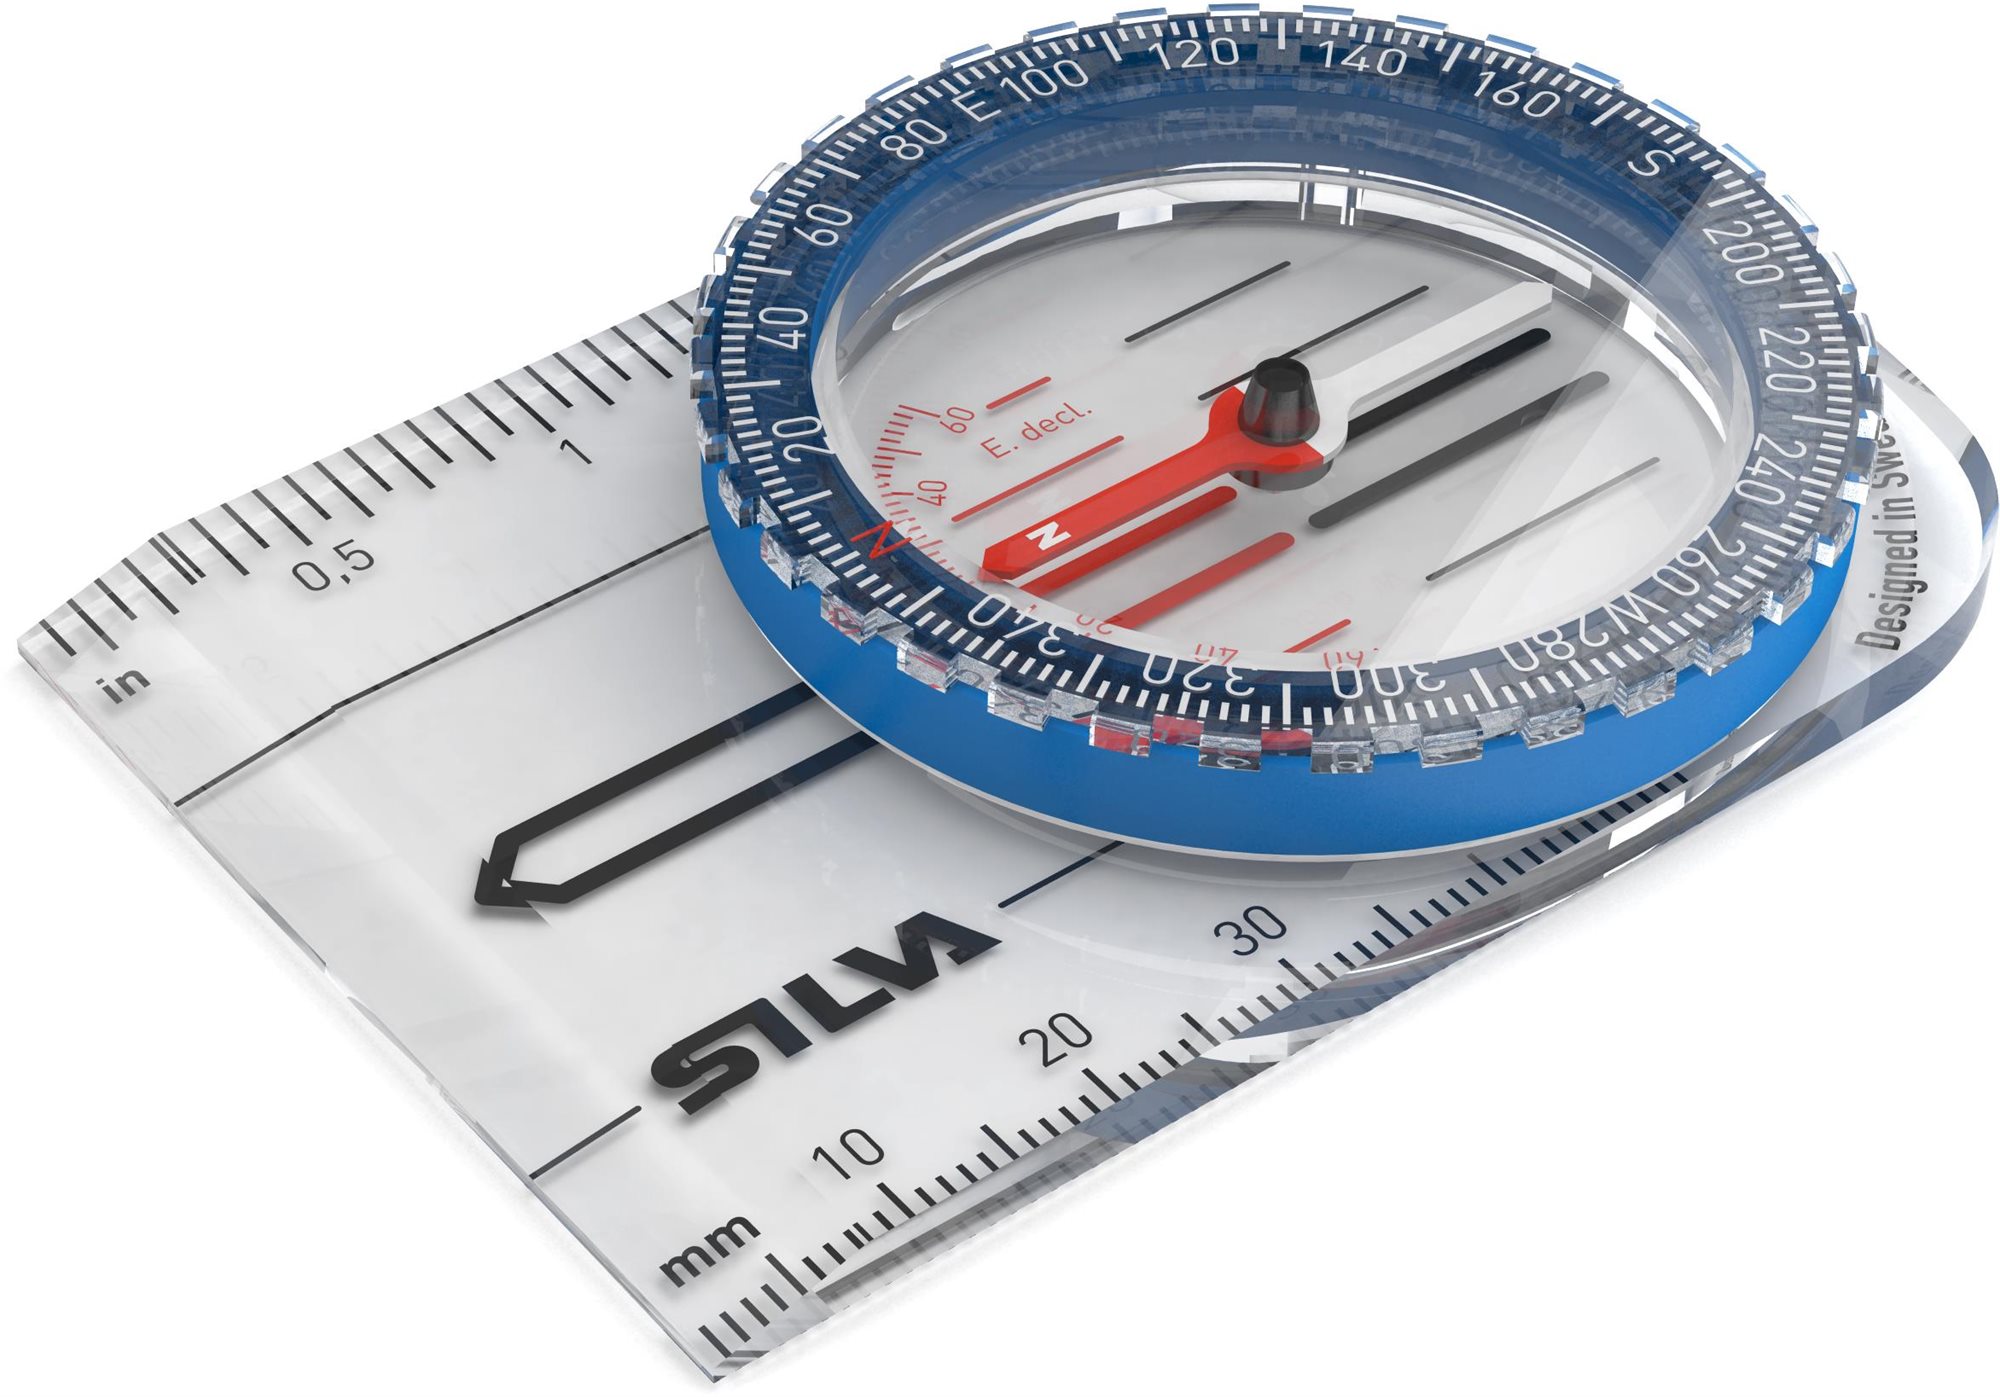 Laptájoló SILVA Compass Starter 1-2-3